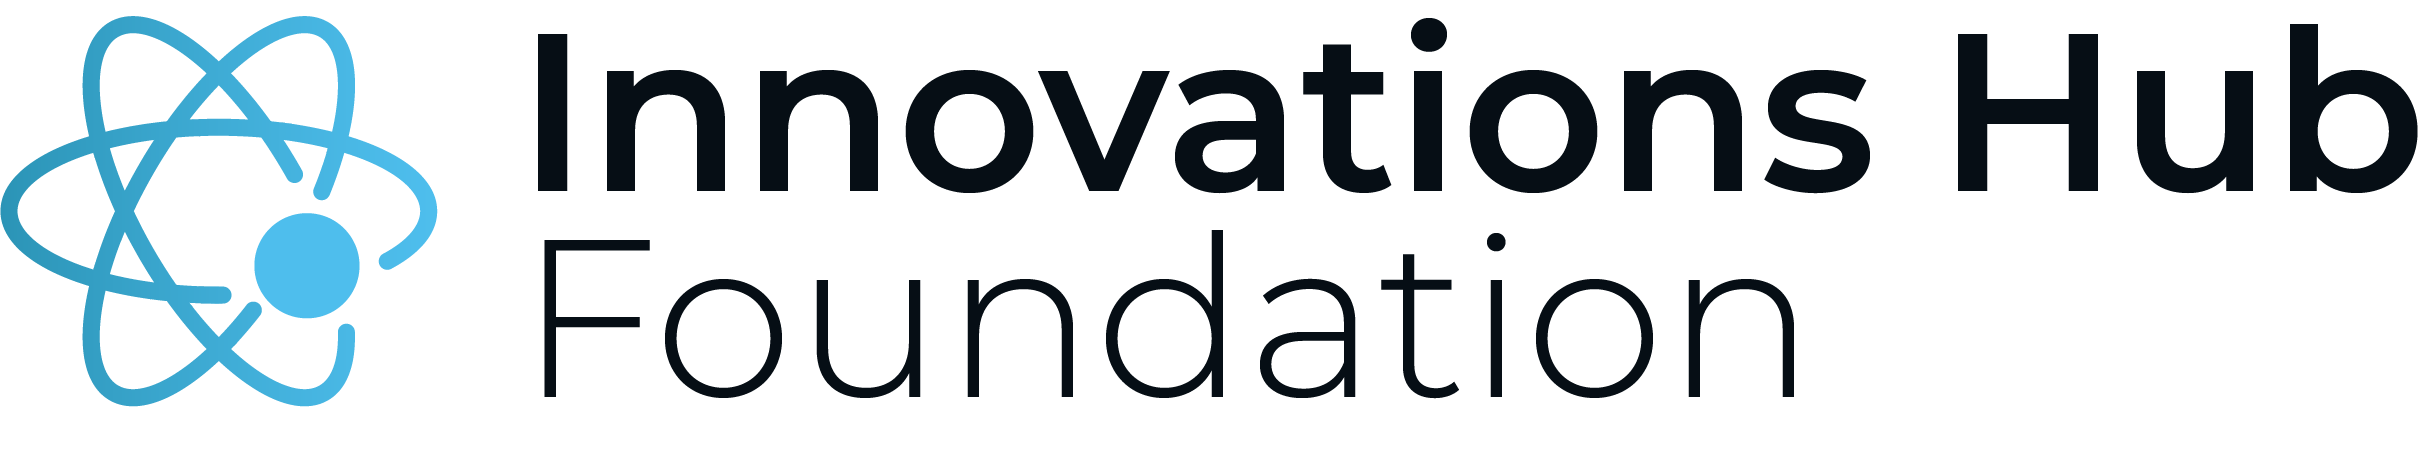 Innovations Hub Foundation - POLAND